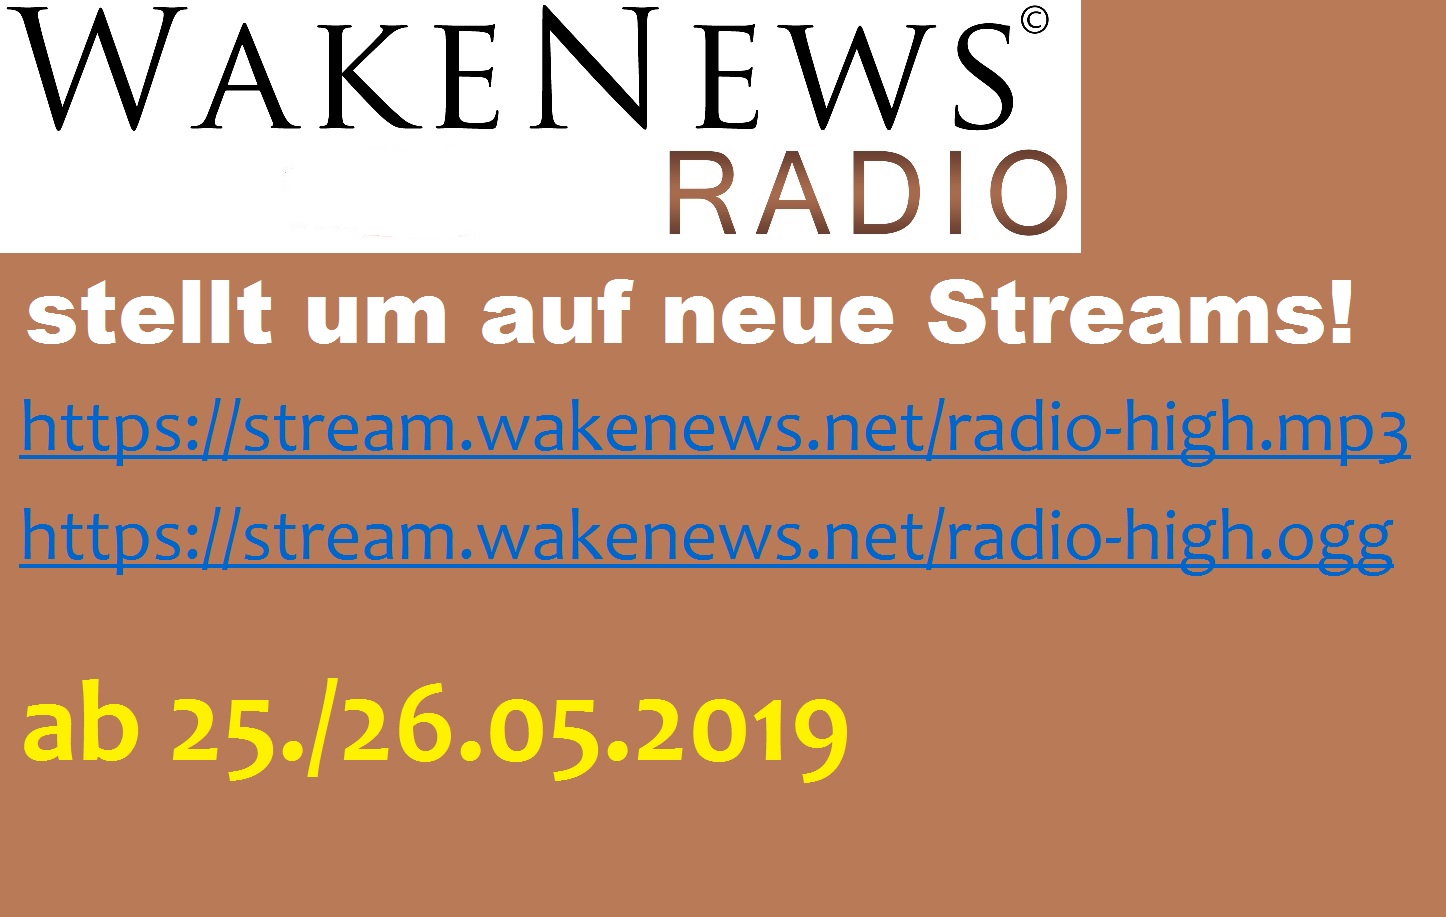 Wake News Radio stellt um auf neue Streams ab 25., 26.05.2019